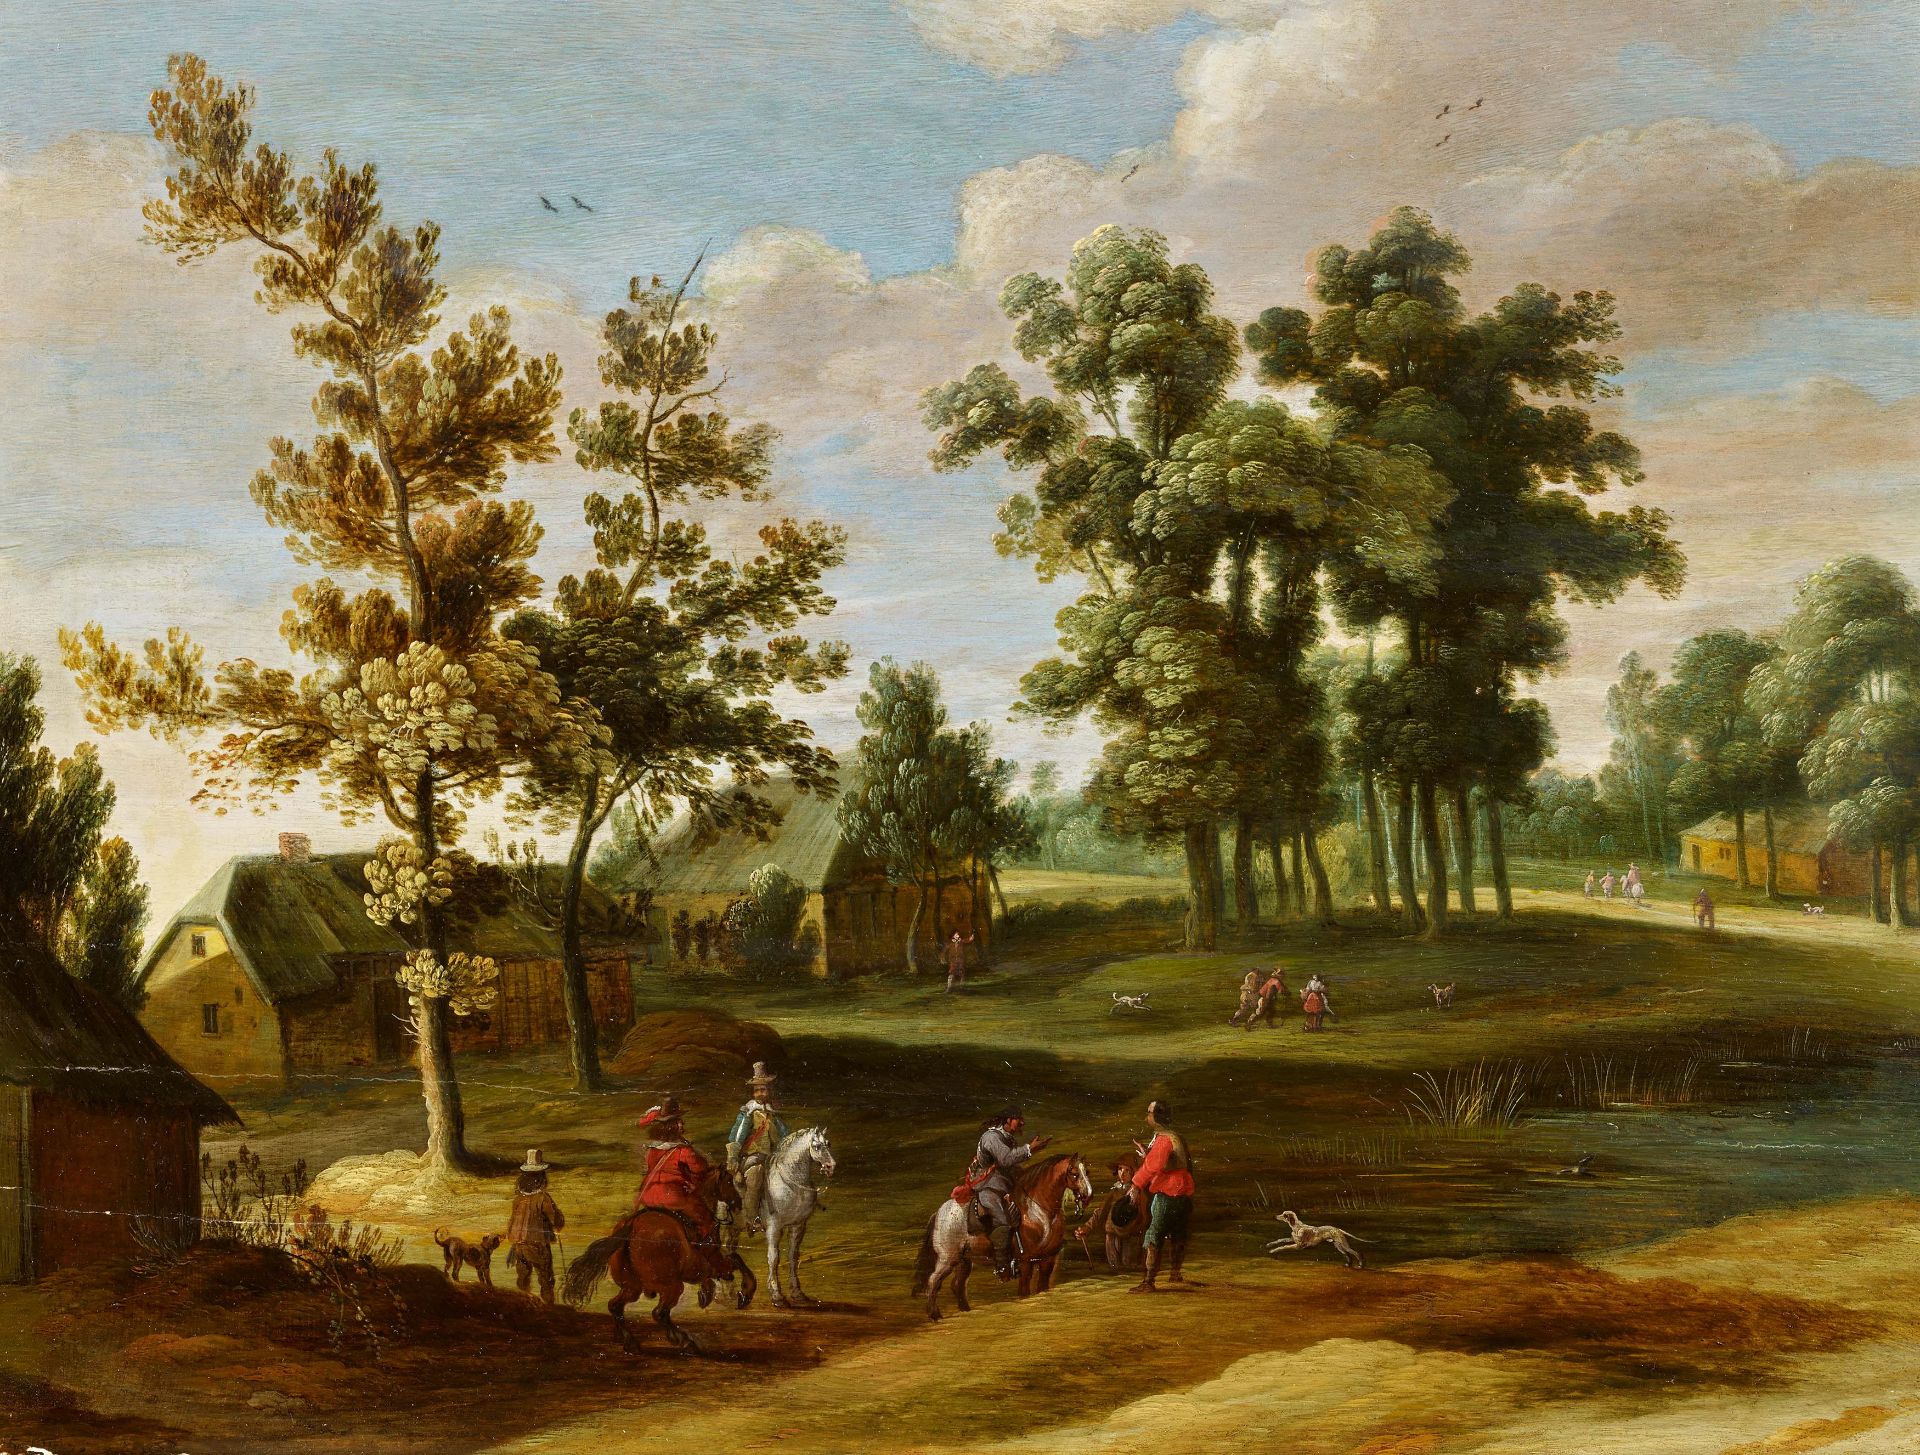 Flemish School: Village Landscape with Equestrians